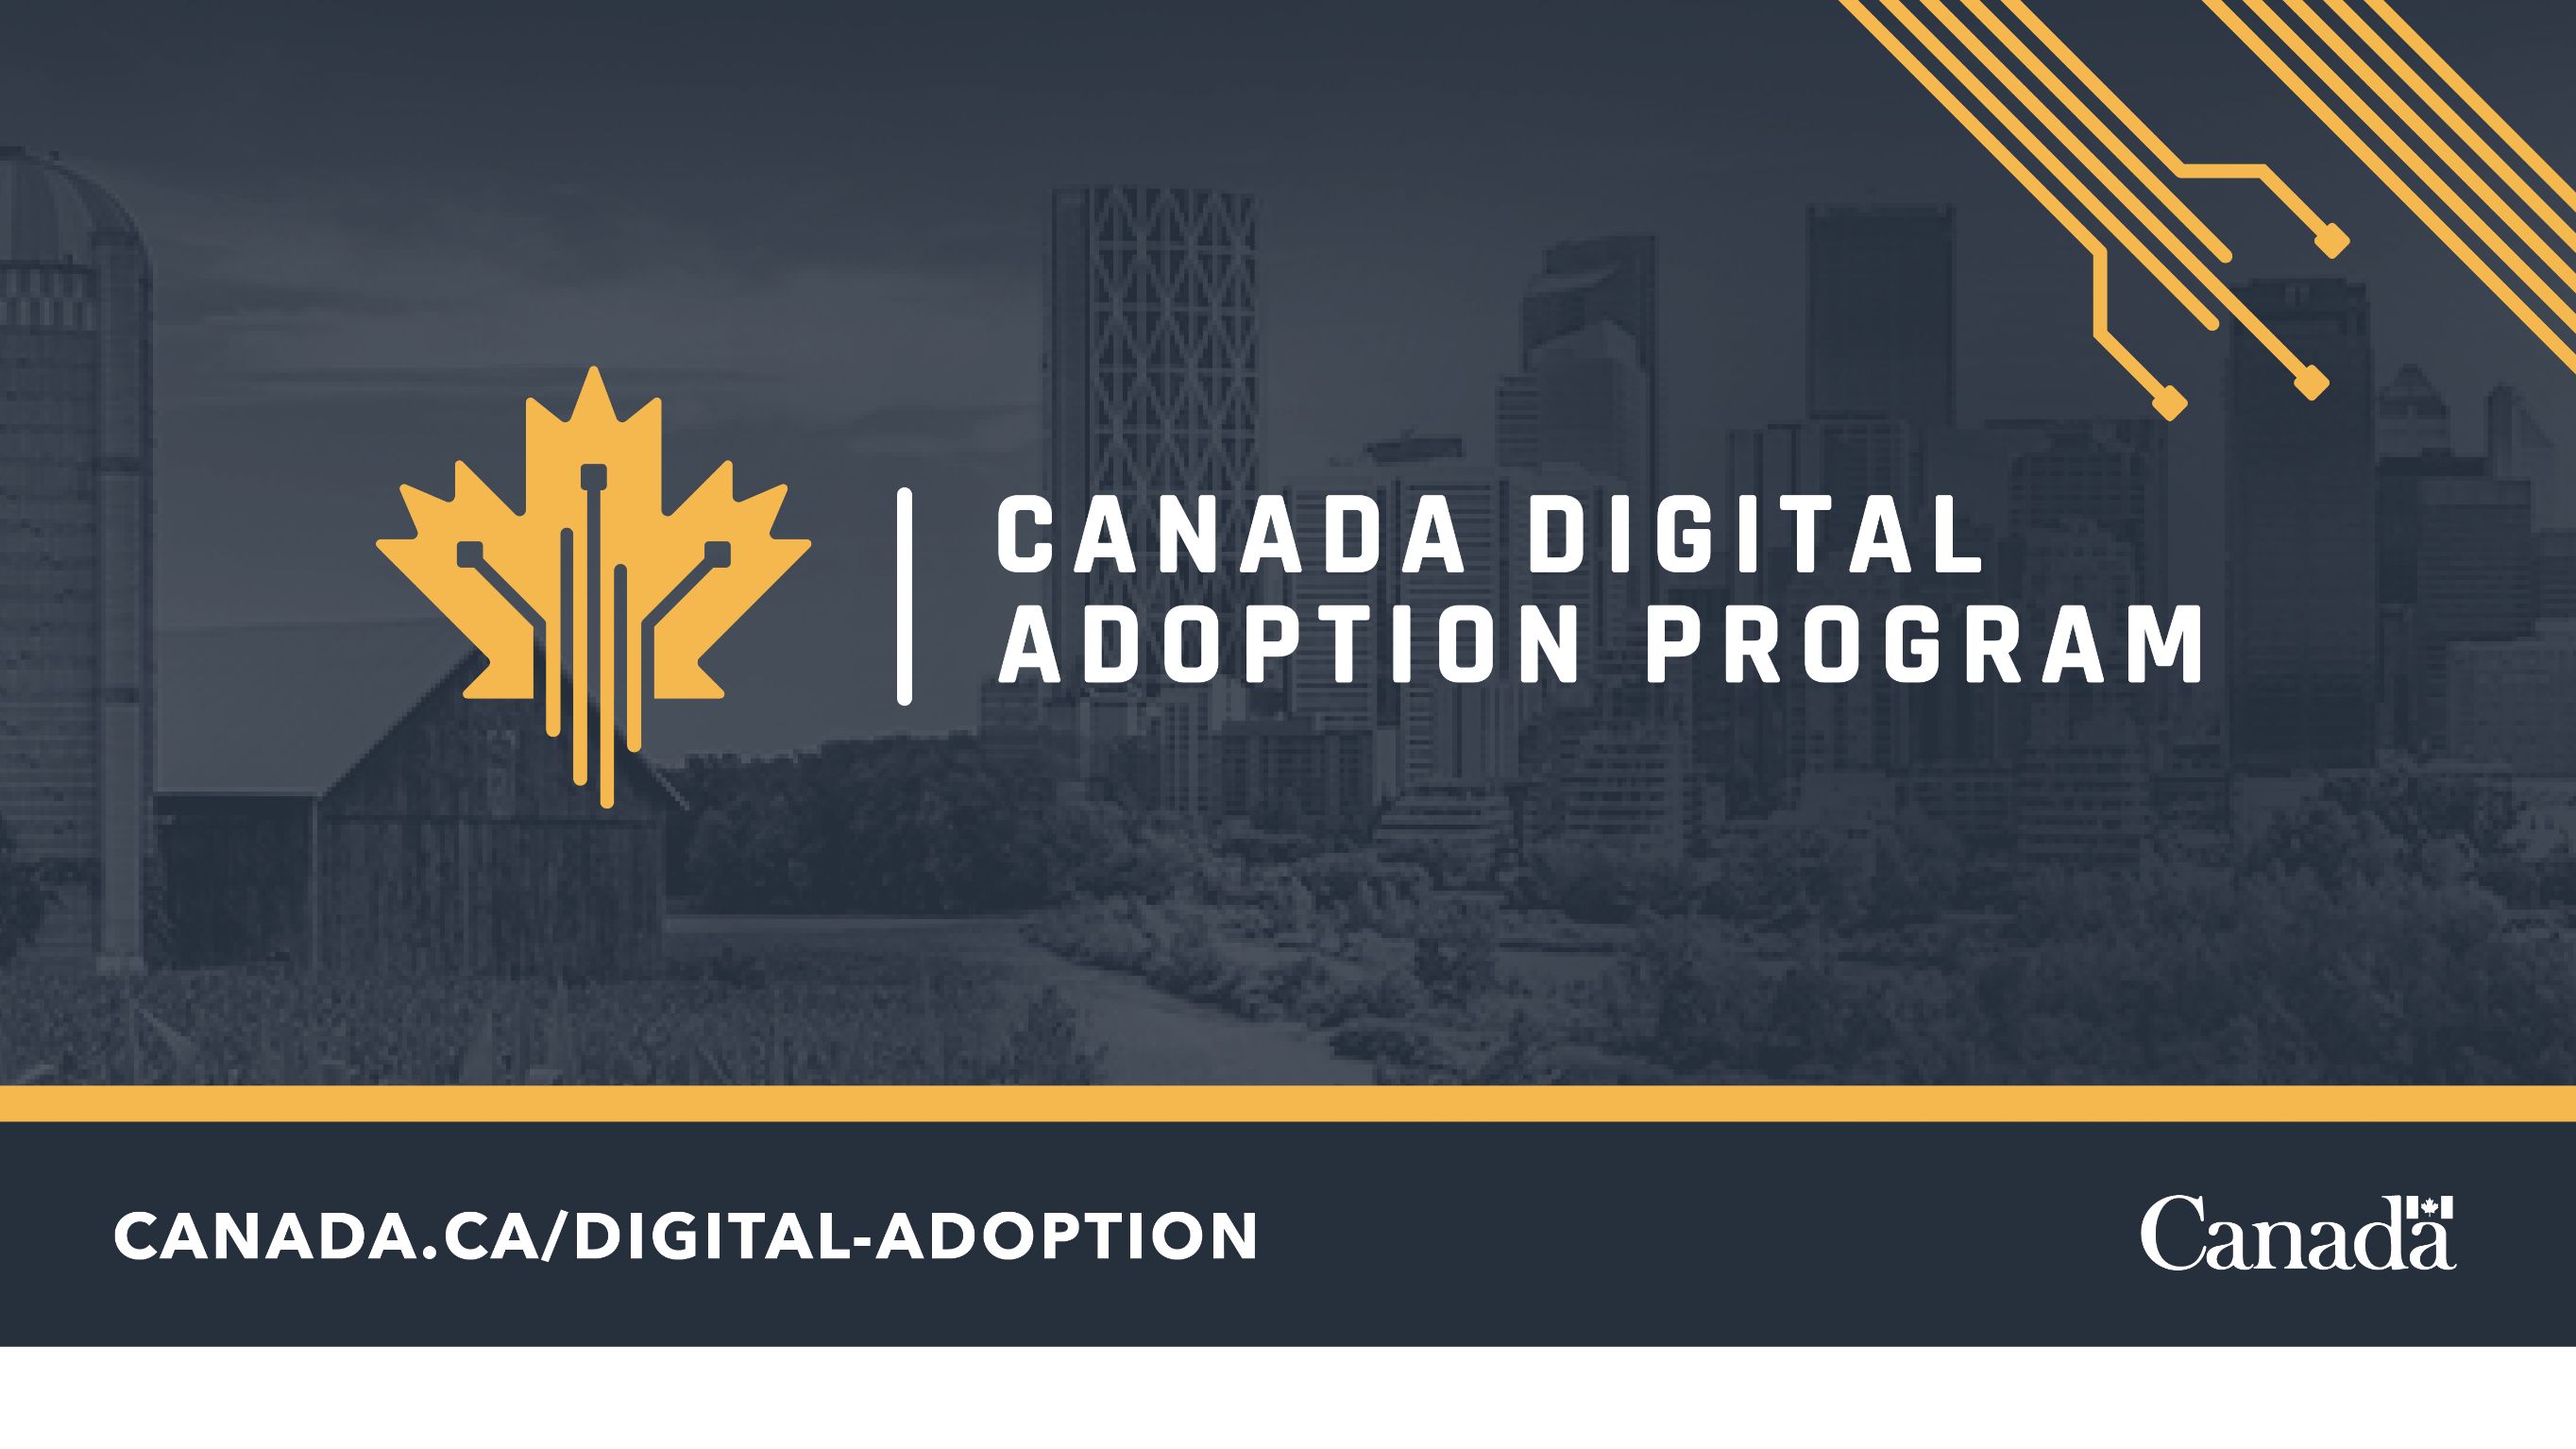 Canadian digital adoption program